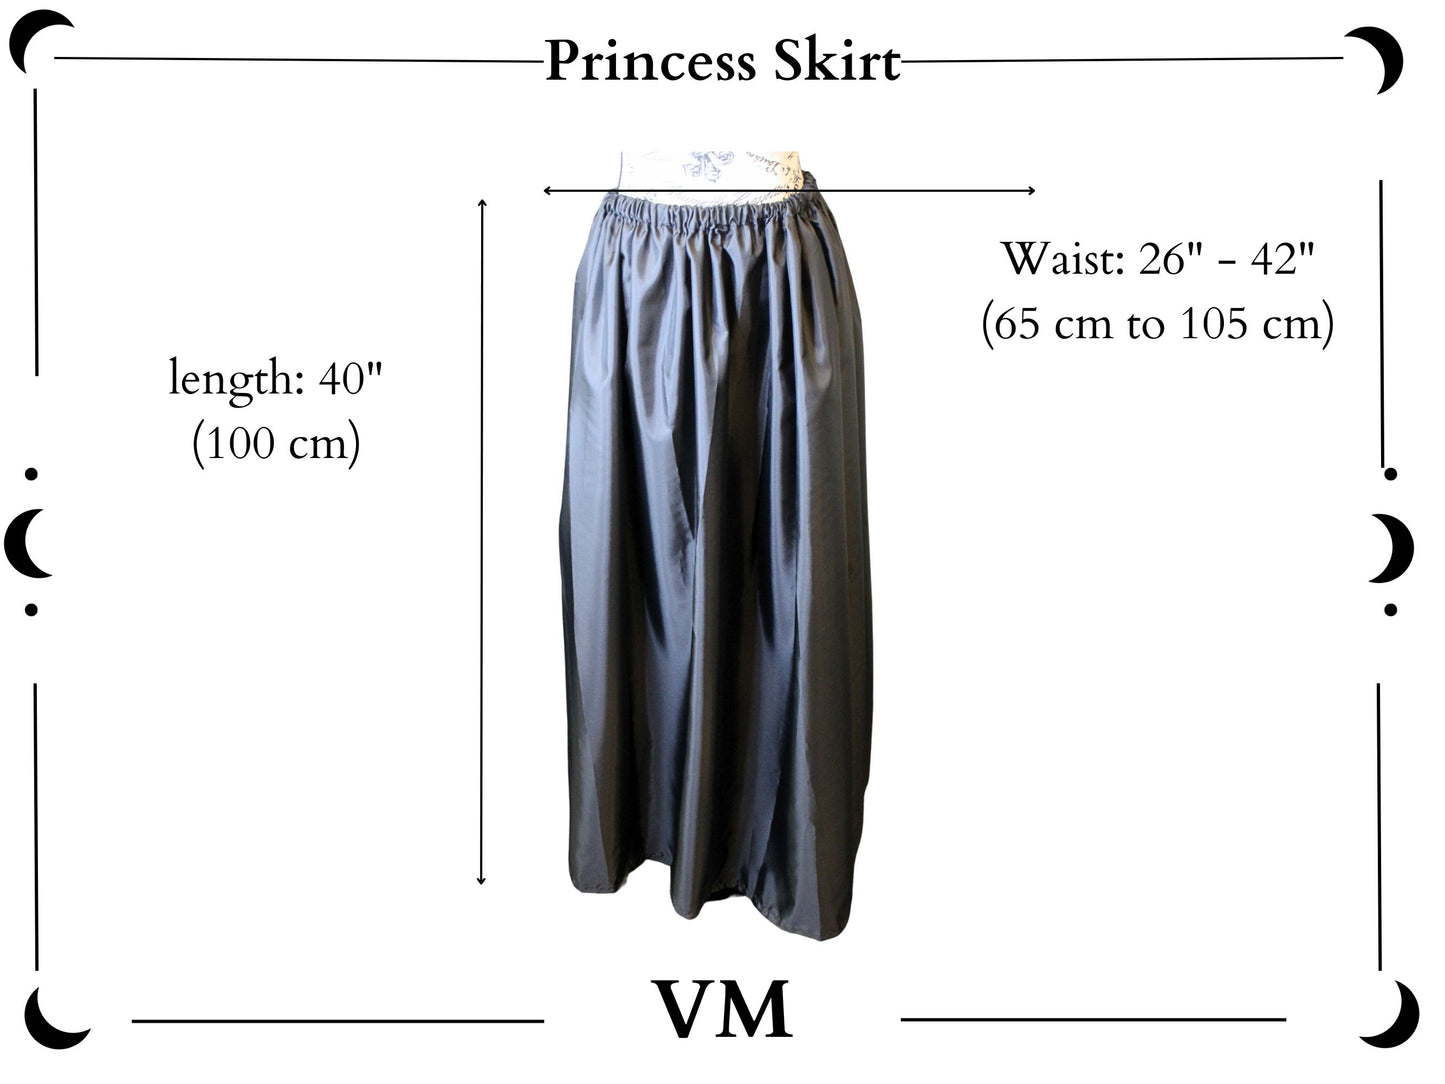 The VM Princess Skirt